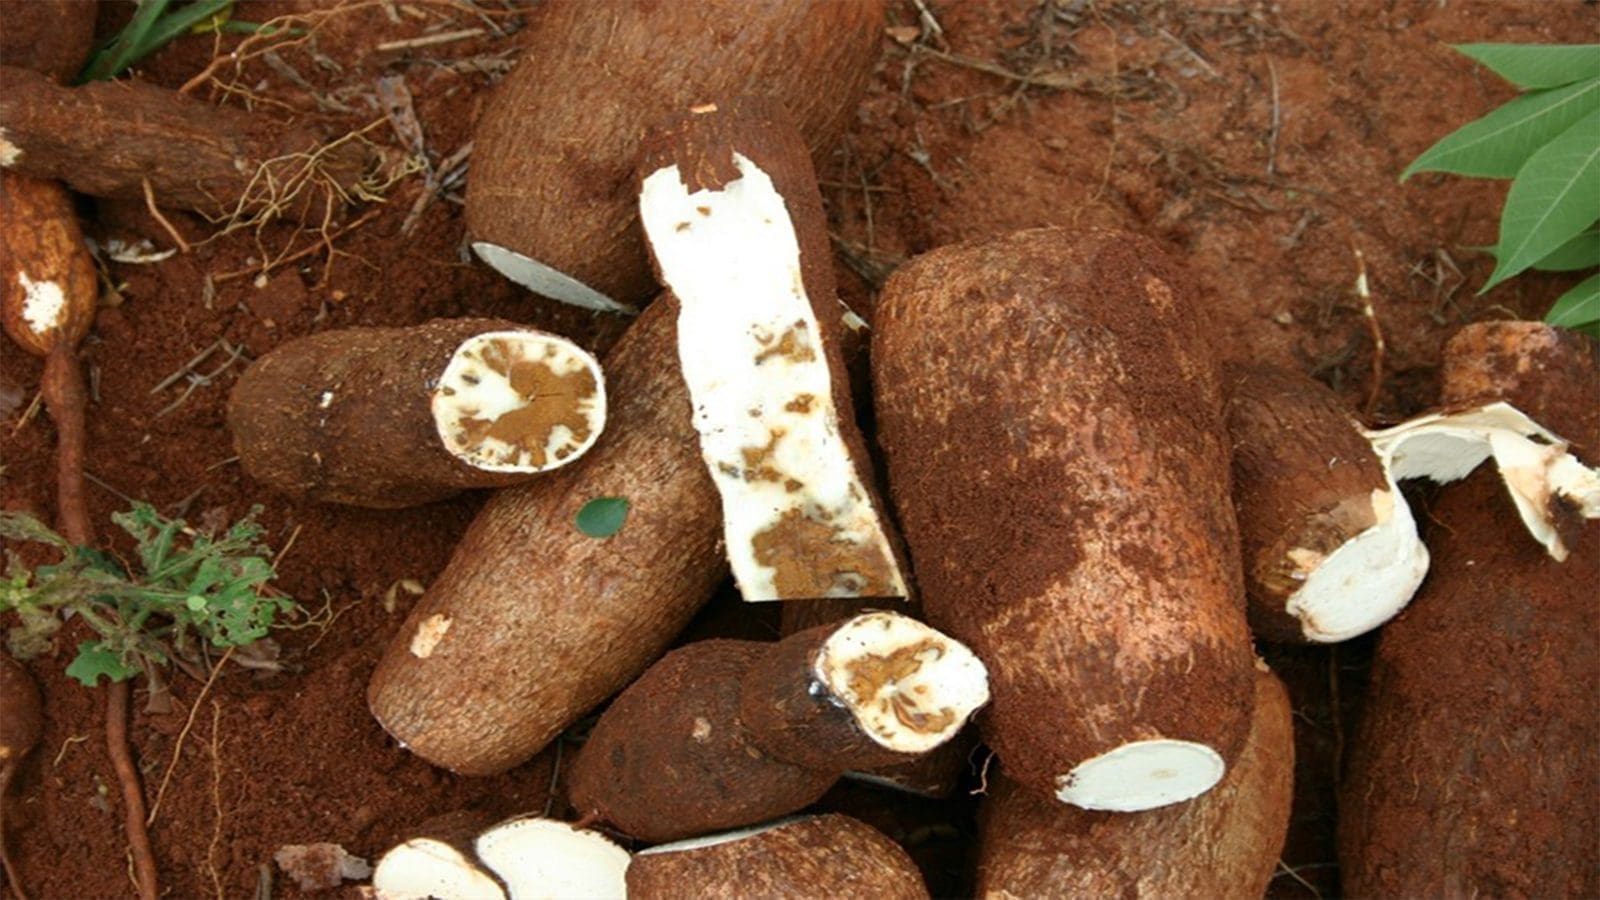 CABI to help farmers in Zambia fight Cassava Brown Streak Disease